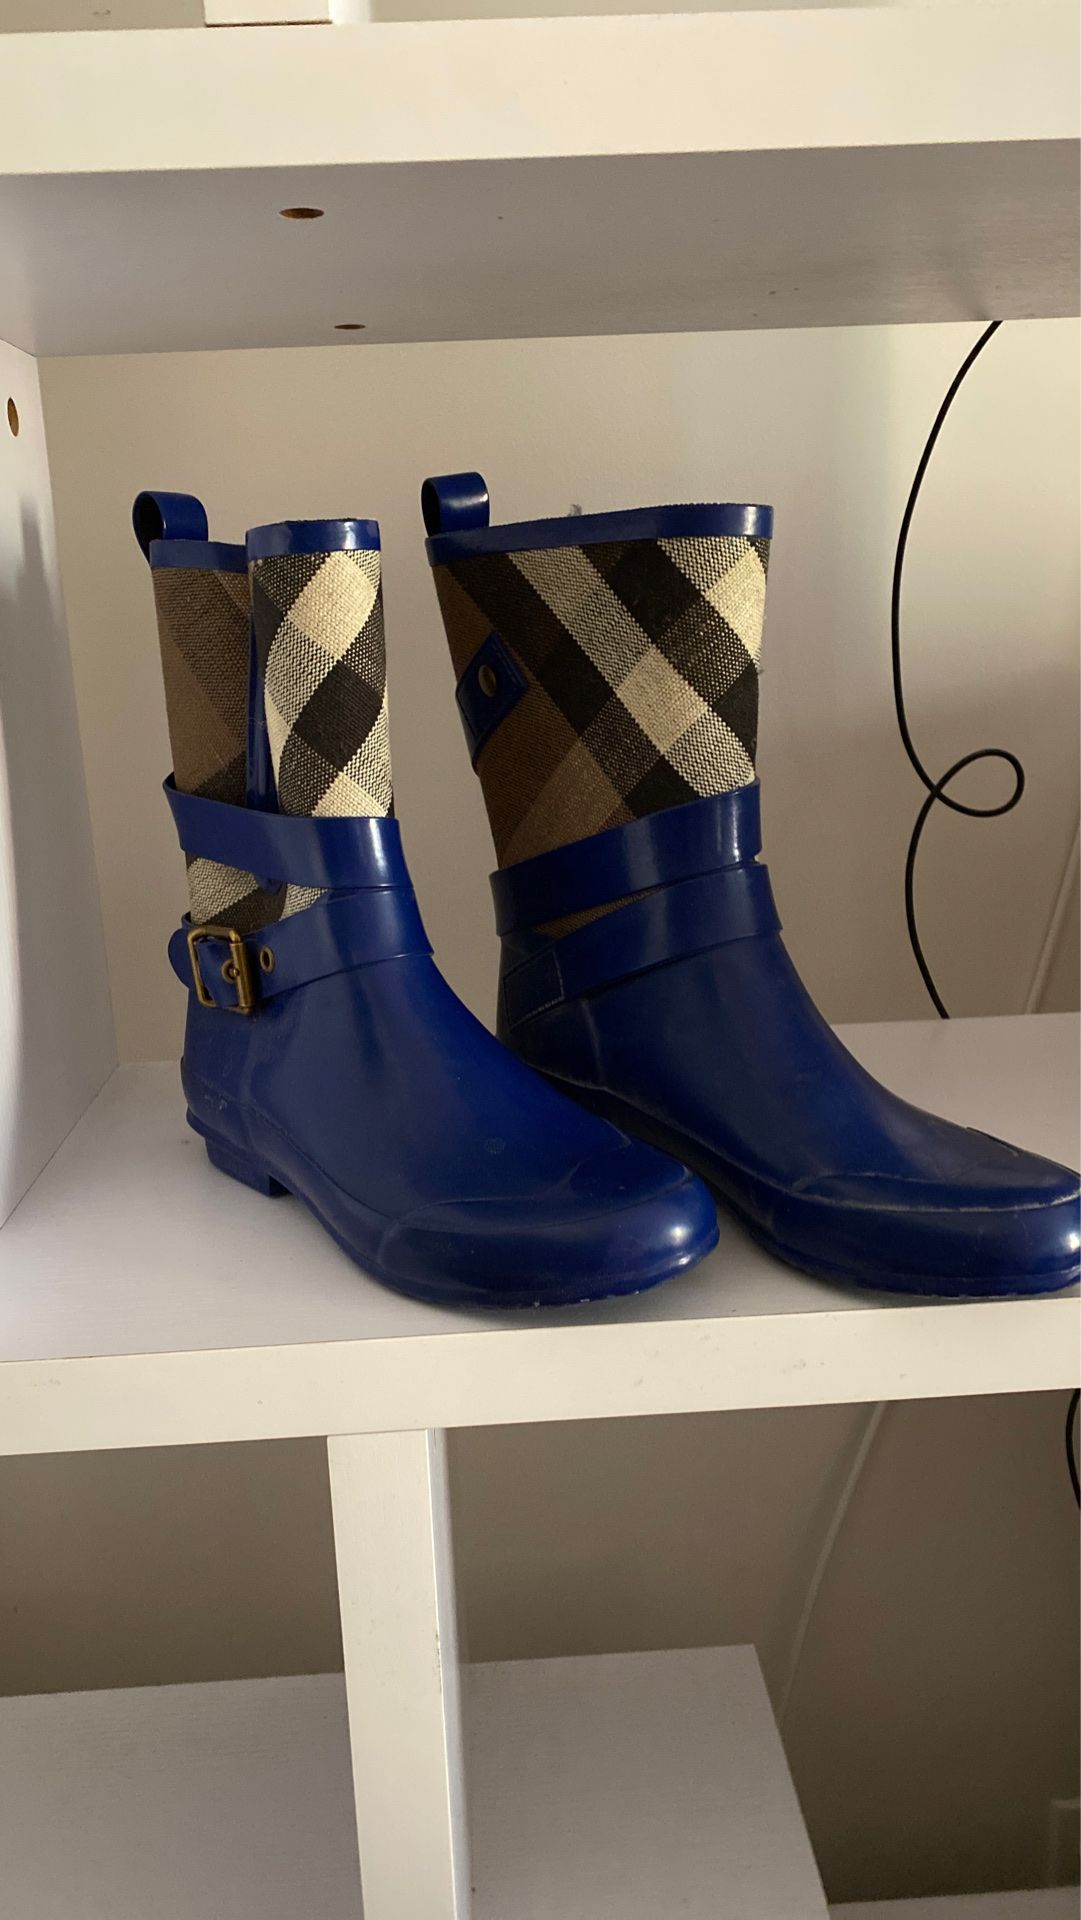 Burberry Women’s Rain boots, size 37